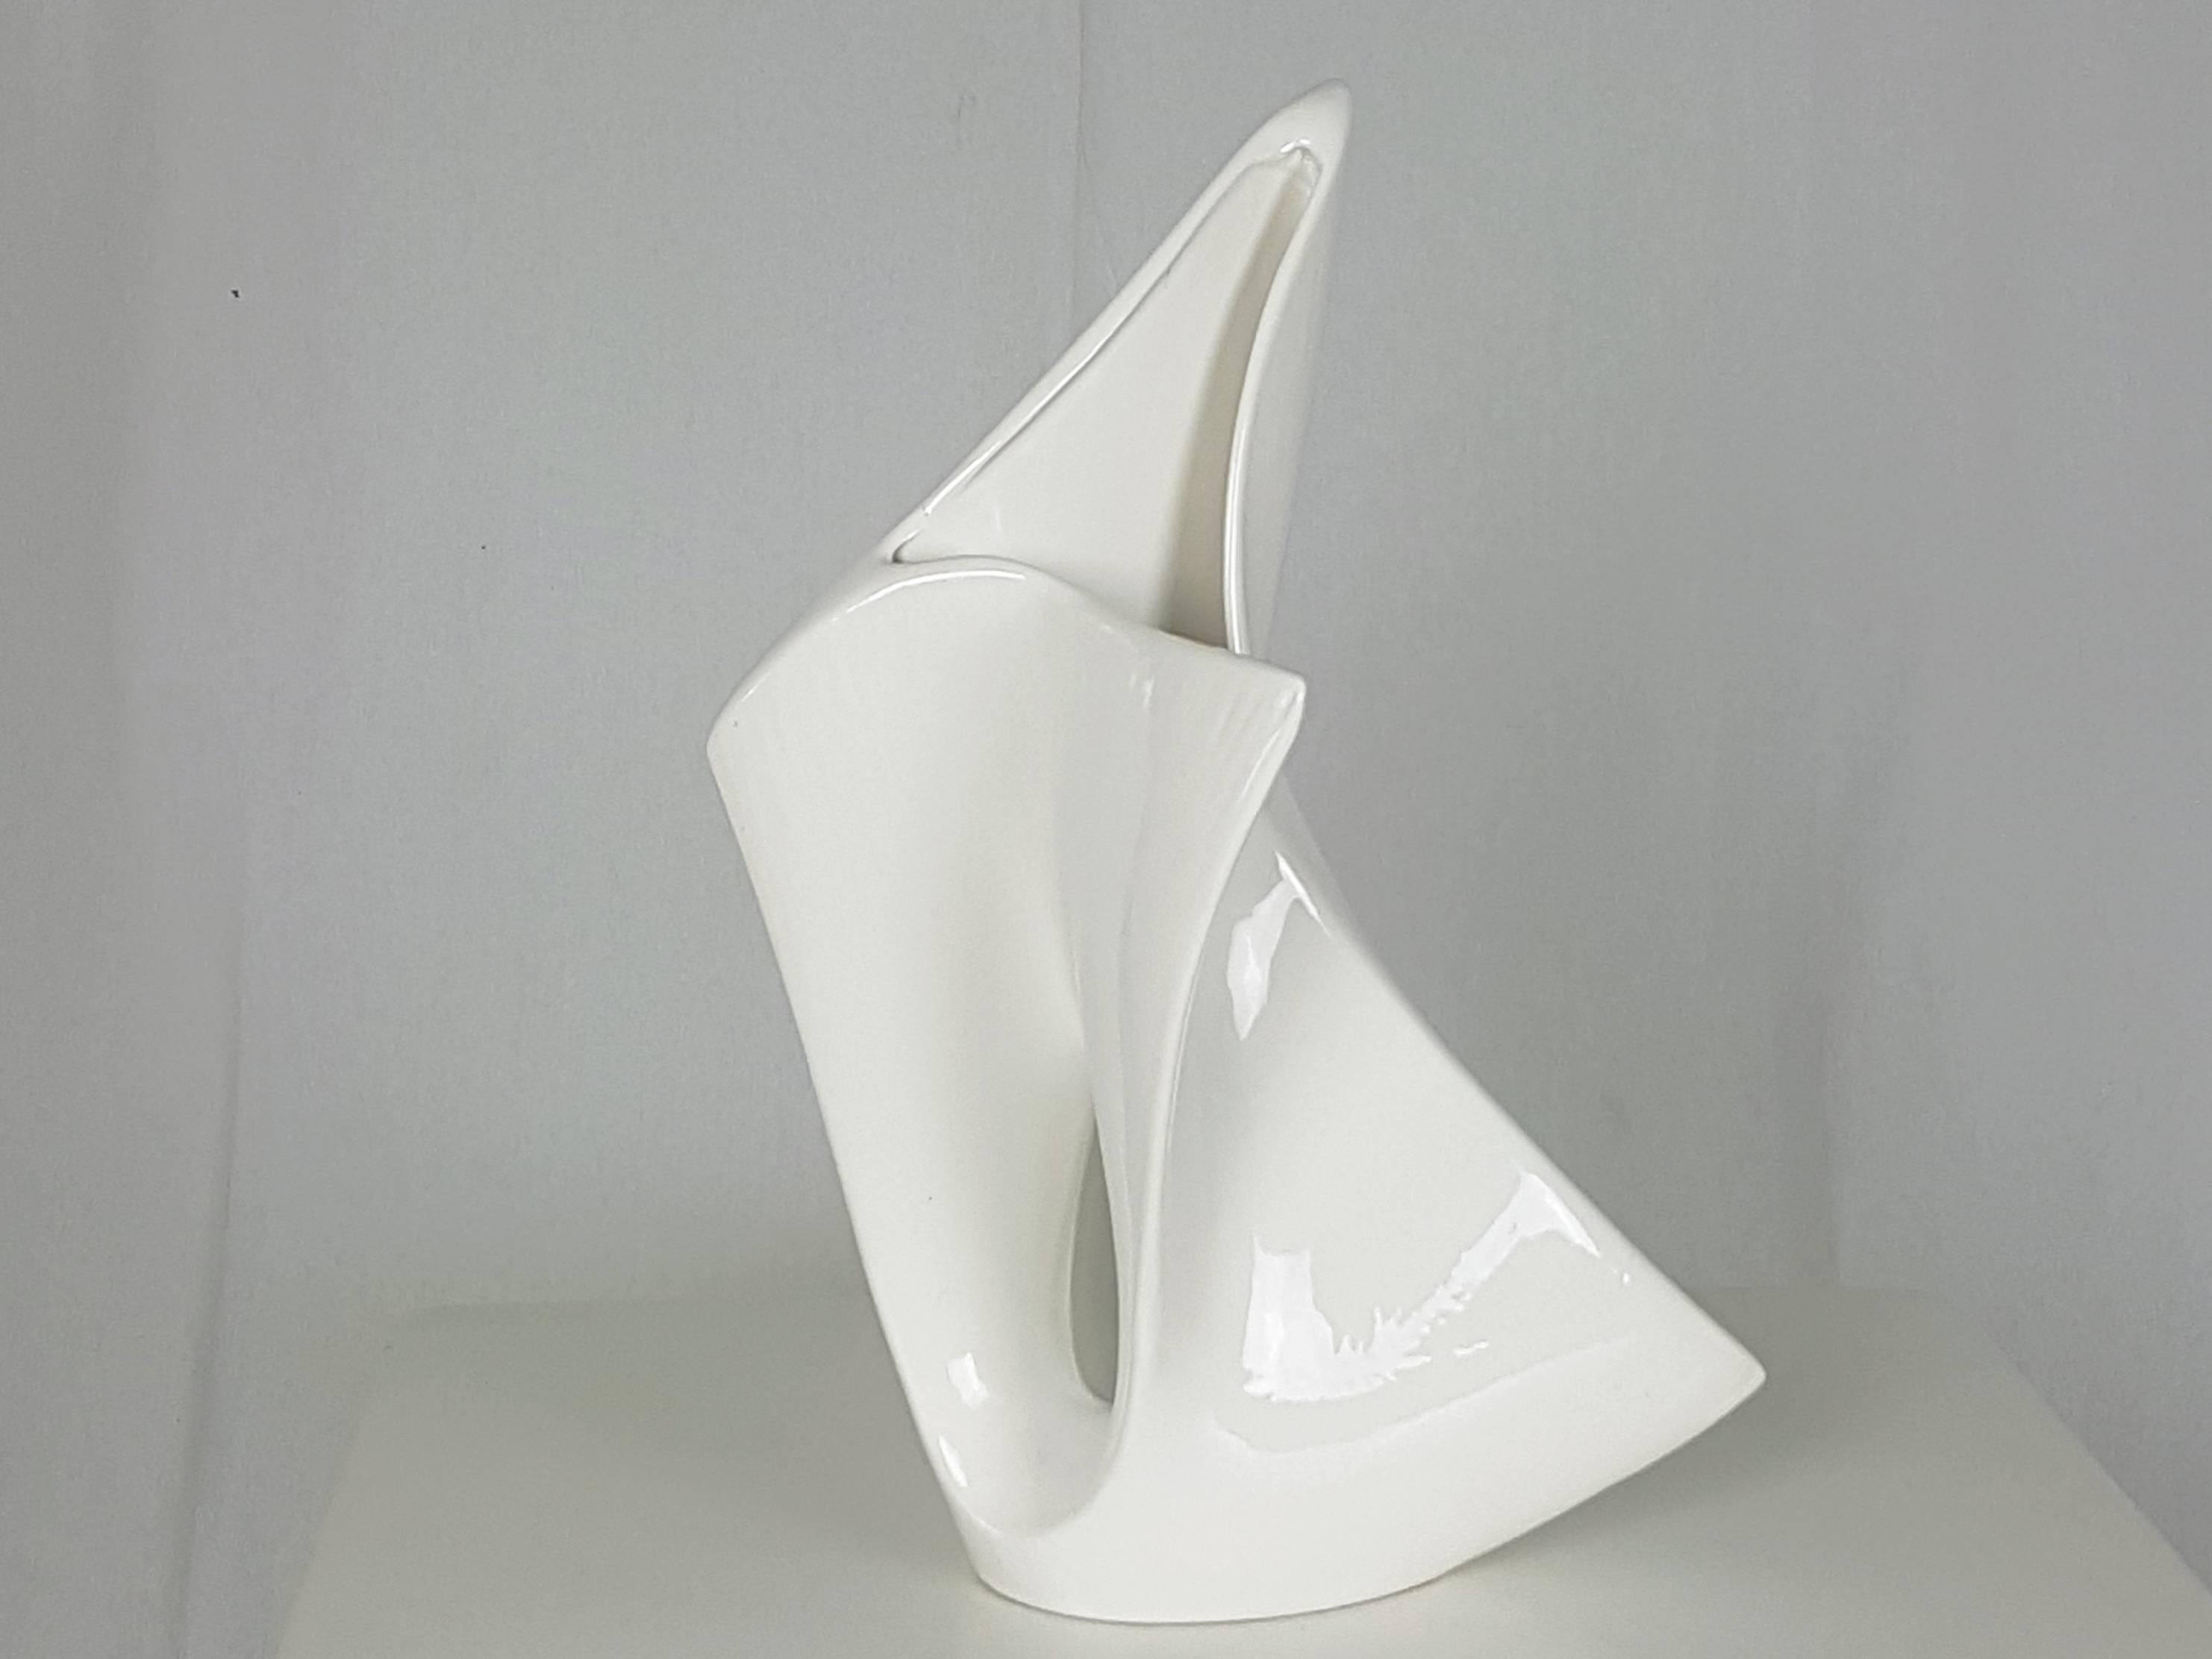 Glazed Italian Sculptural White Ceramic Vase from Vibi, 1950s For Sale